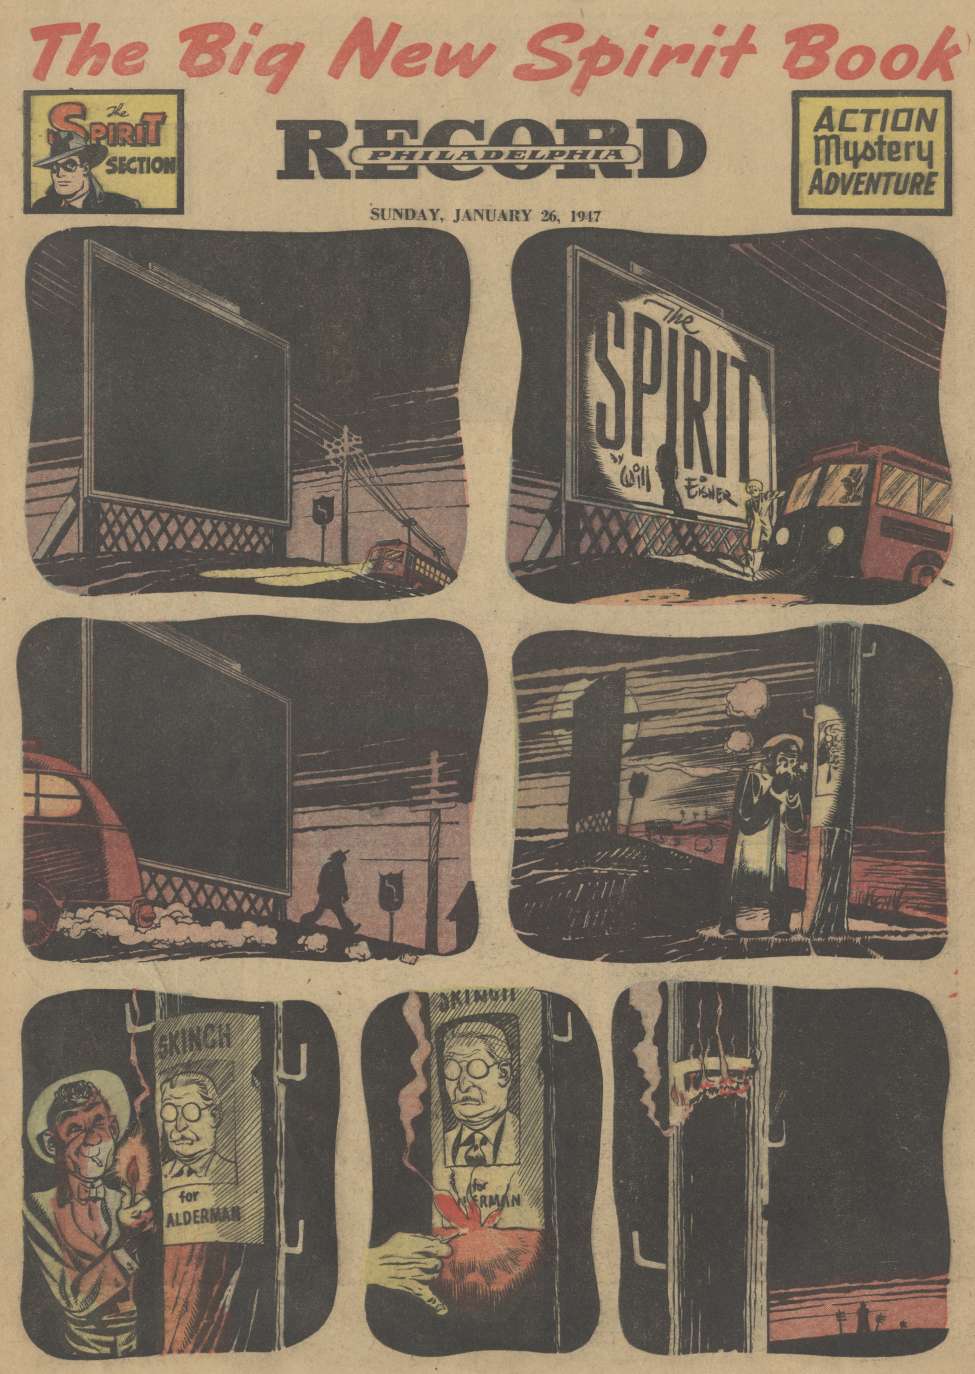 Book Cover For The Spirit (1947-01-26) - Philadelphia Record